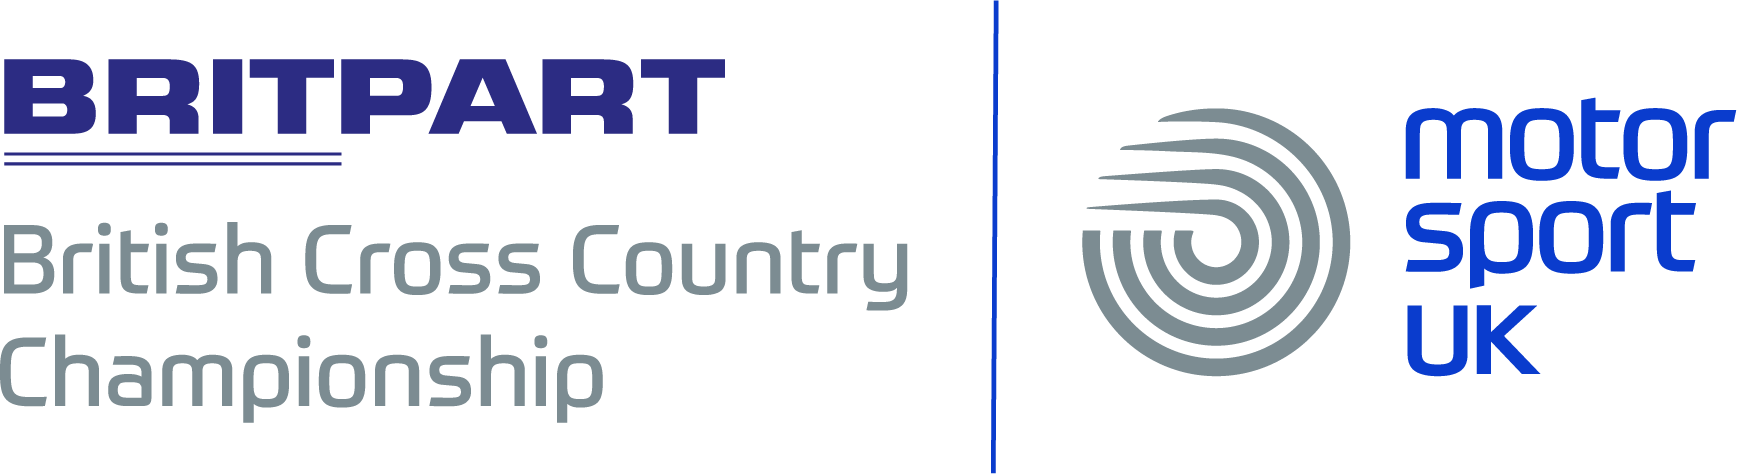 The Britpart British Cross Country Championship 2019